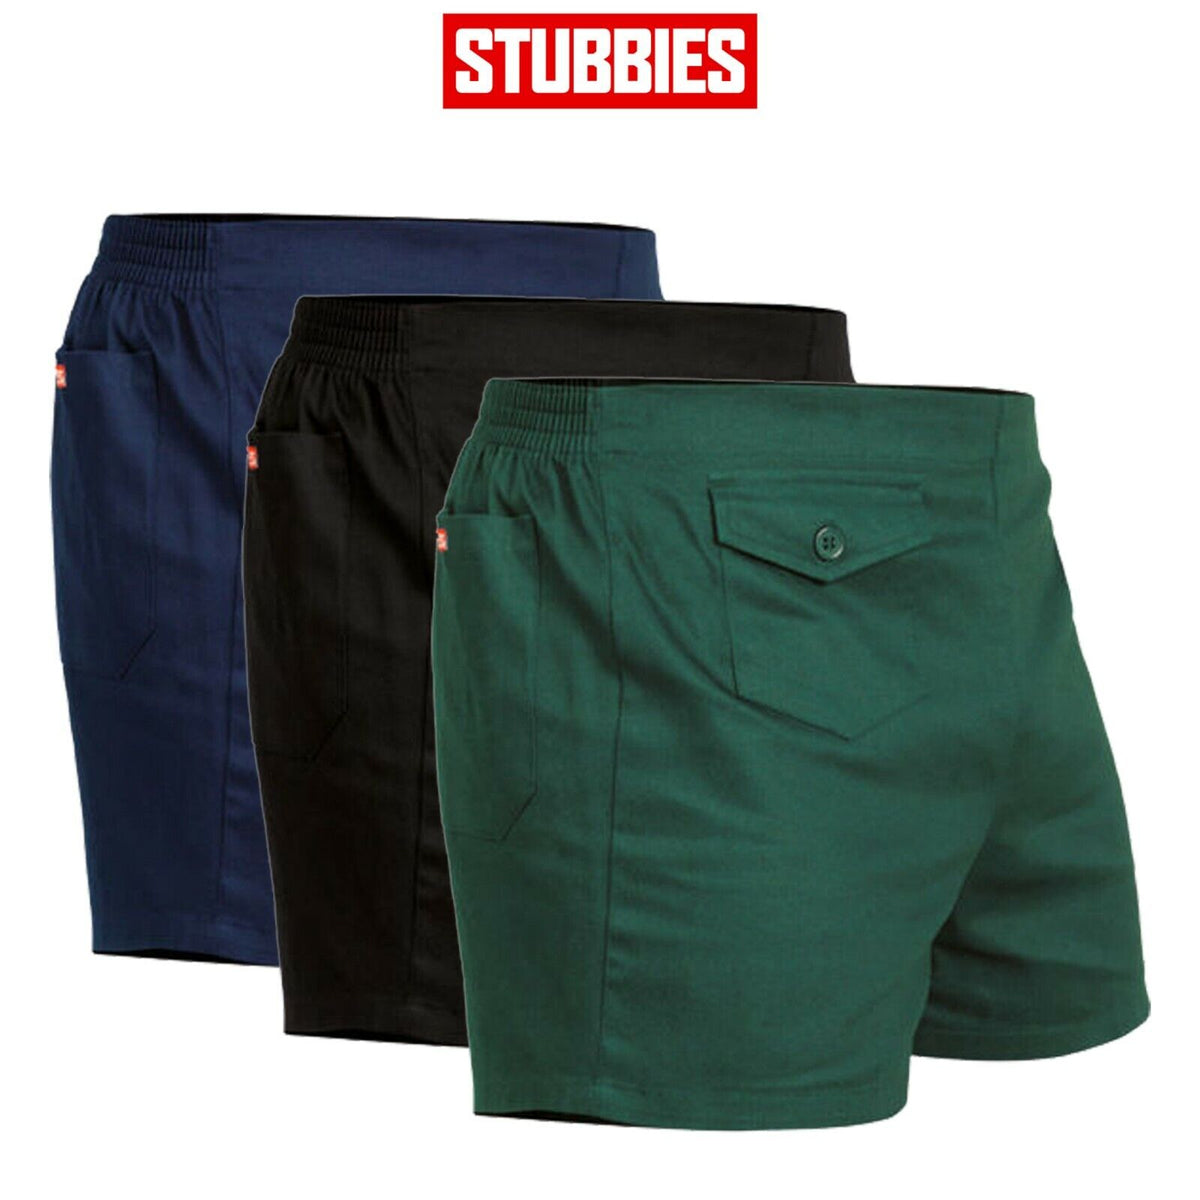 Mens Stubbies Original Work Short Shorts Elastic Back Cotton Drill Summer SE2010